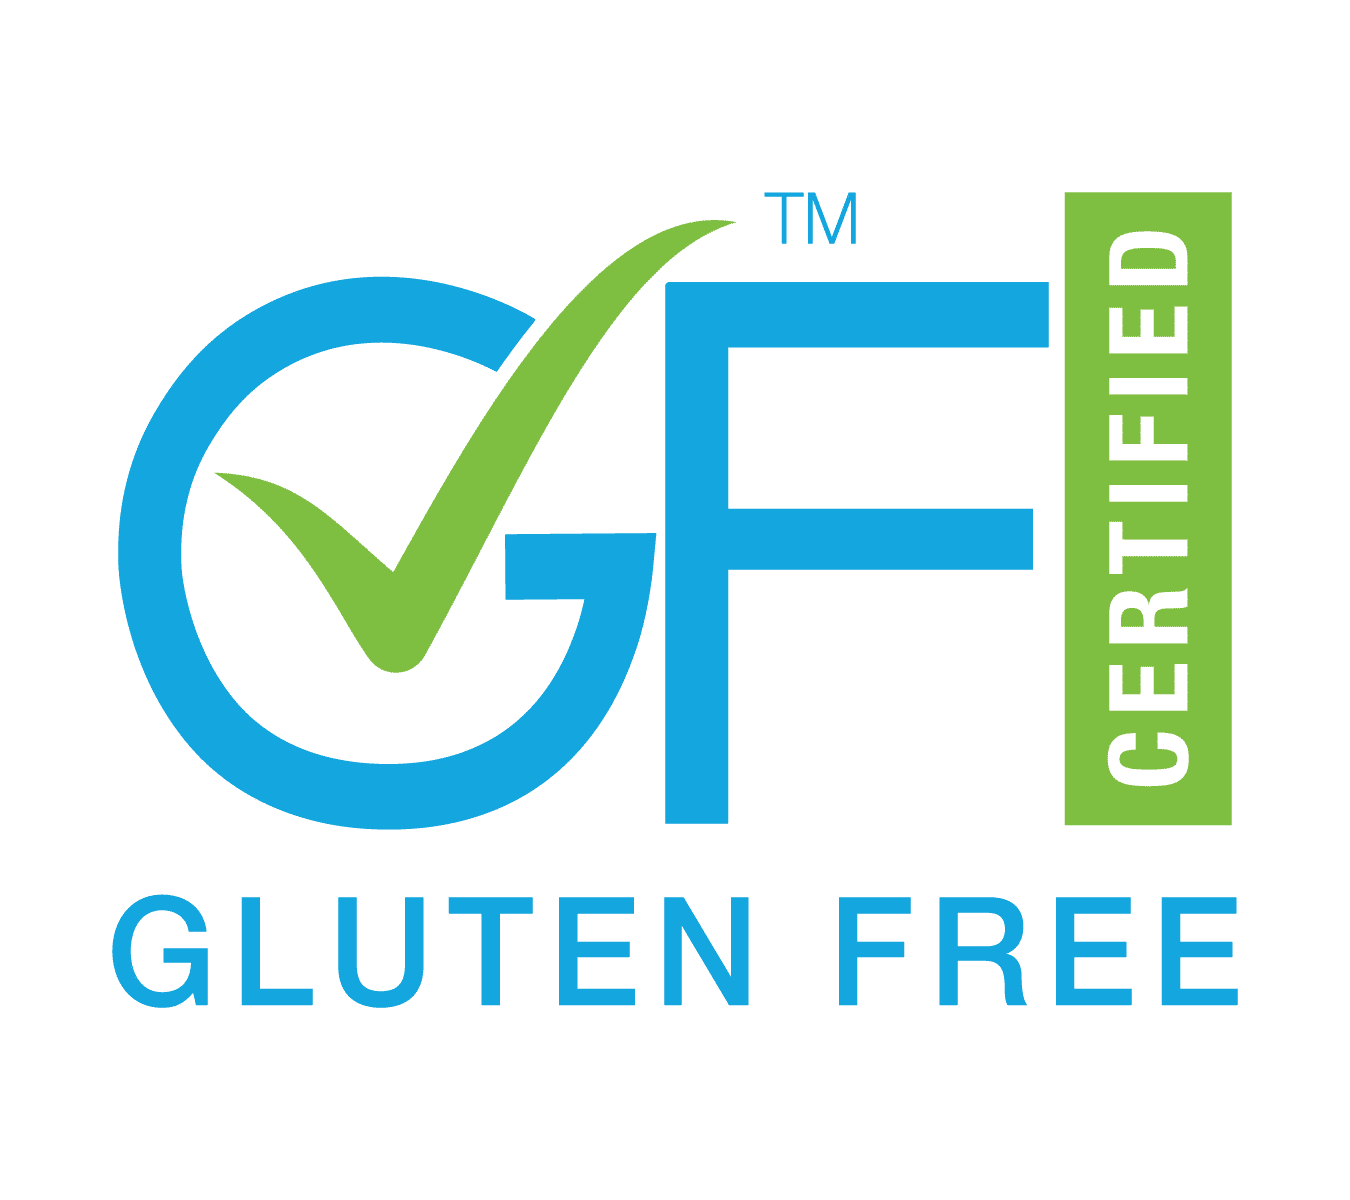 gluten-free certification for restaurants - gluten free food program